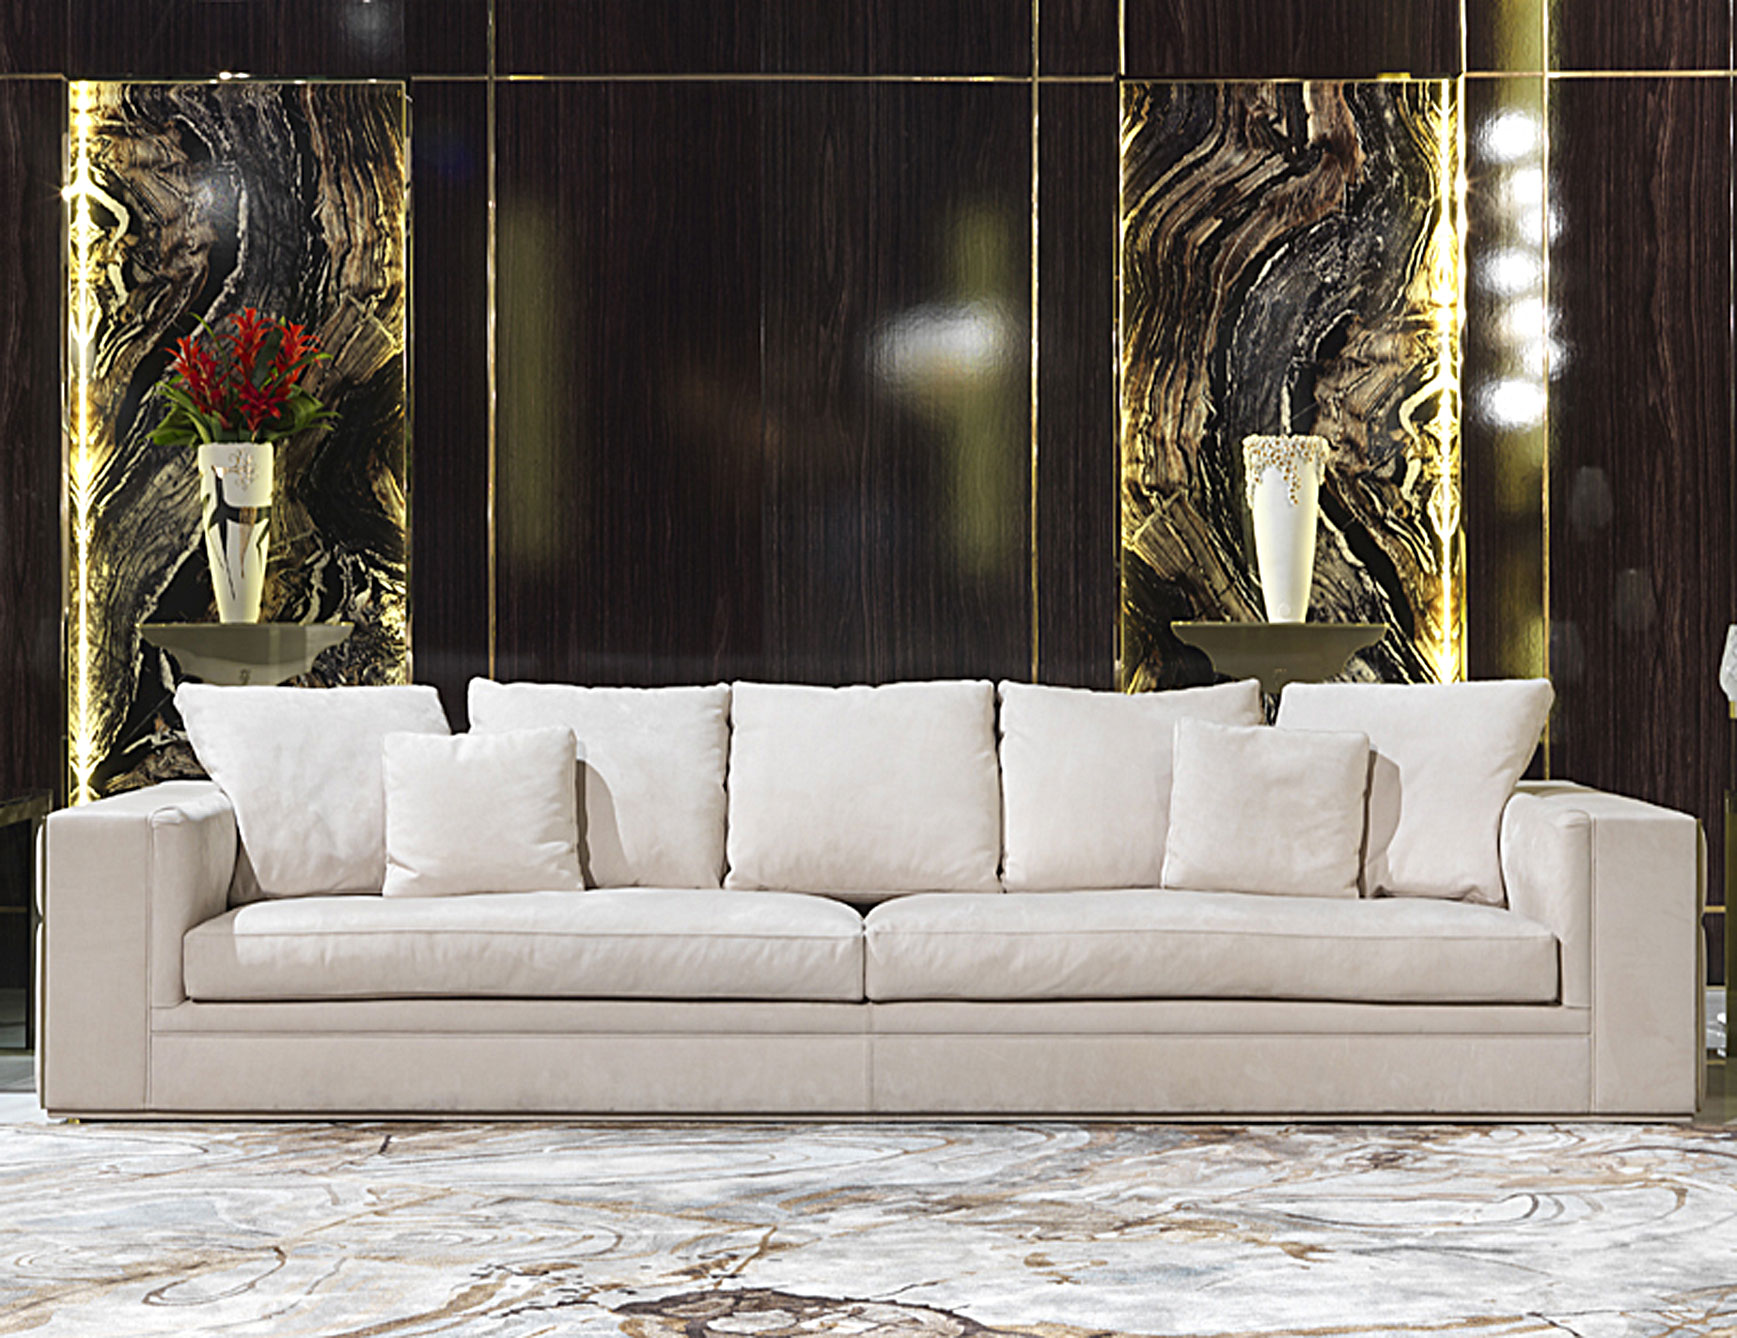 sofa wallpaper,couch,living room,furniture,room,interior design